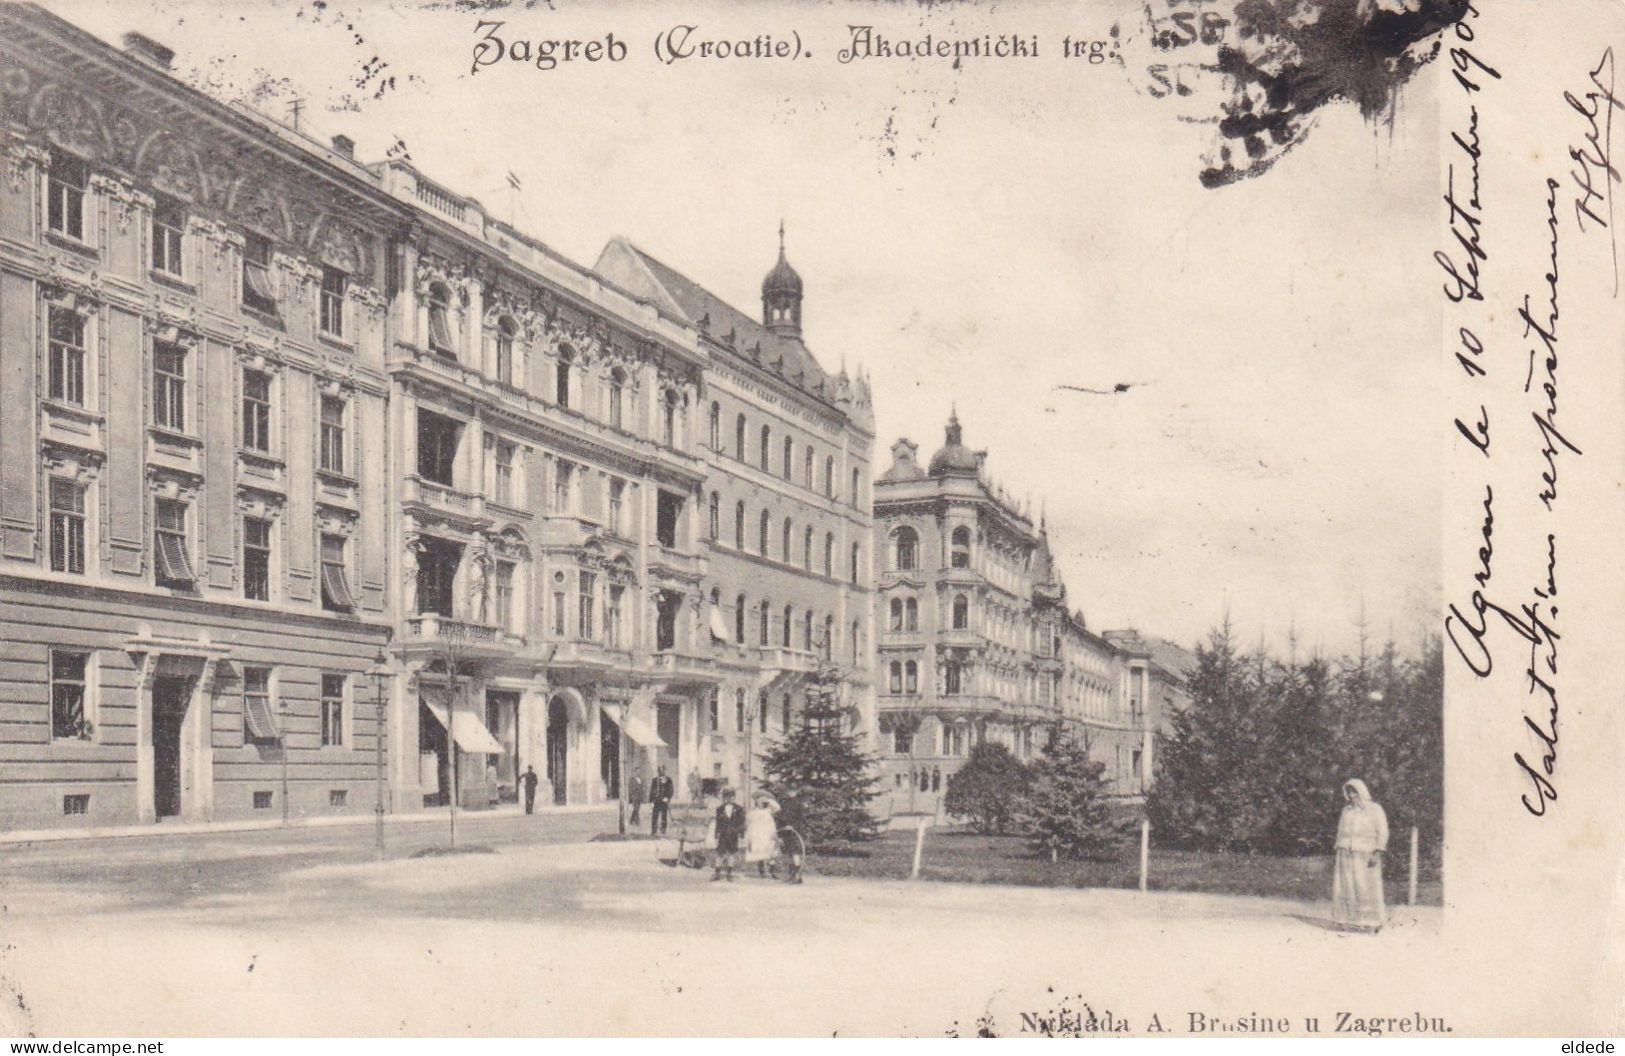 Zagreb Croatie Akademicki Trg.  P. Used 1903 - Croacia